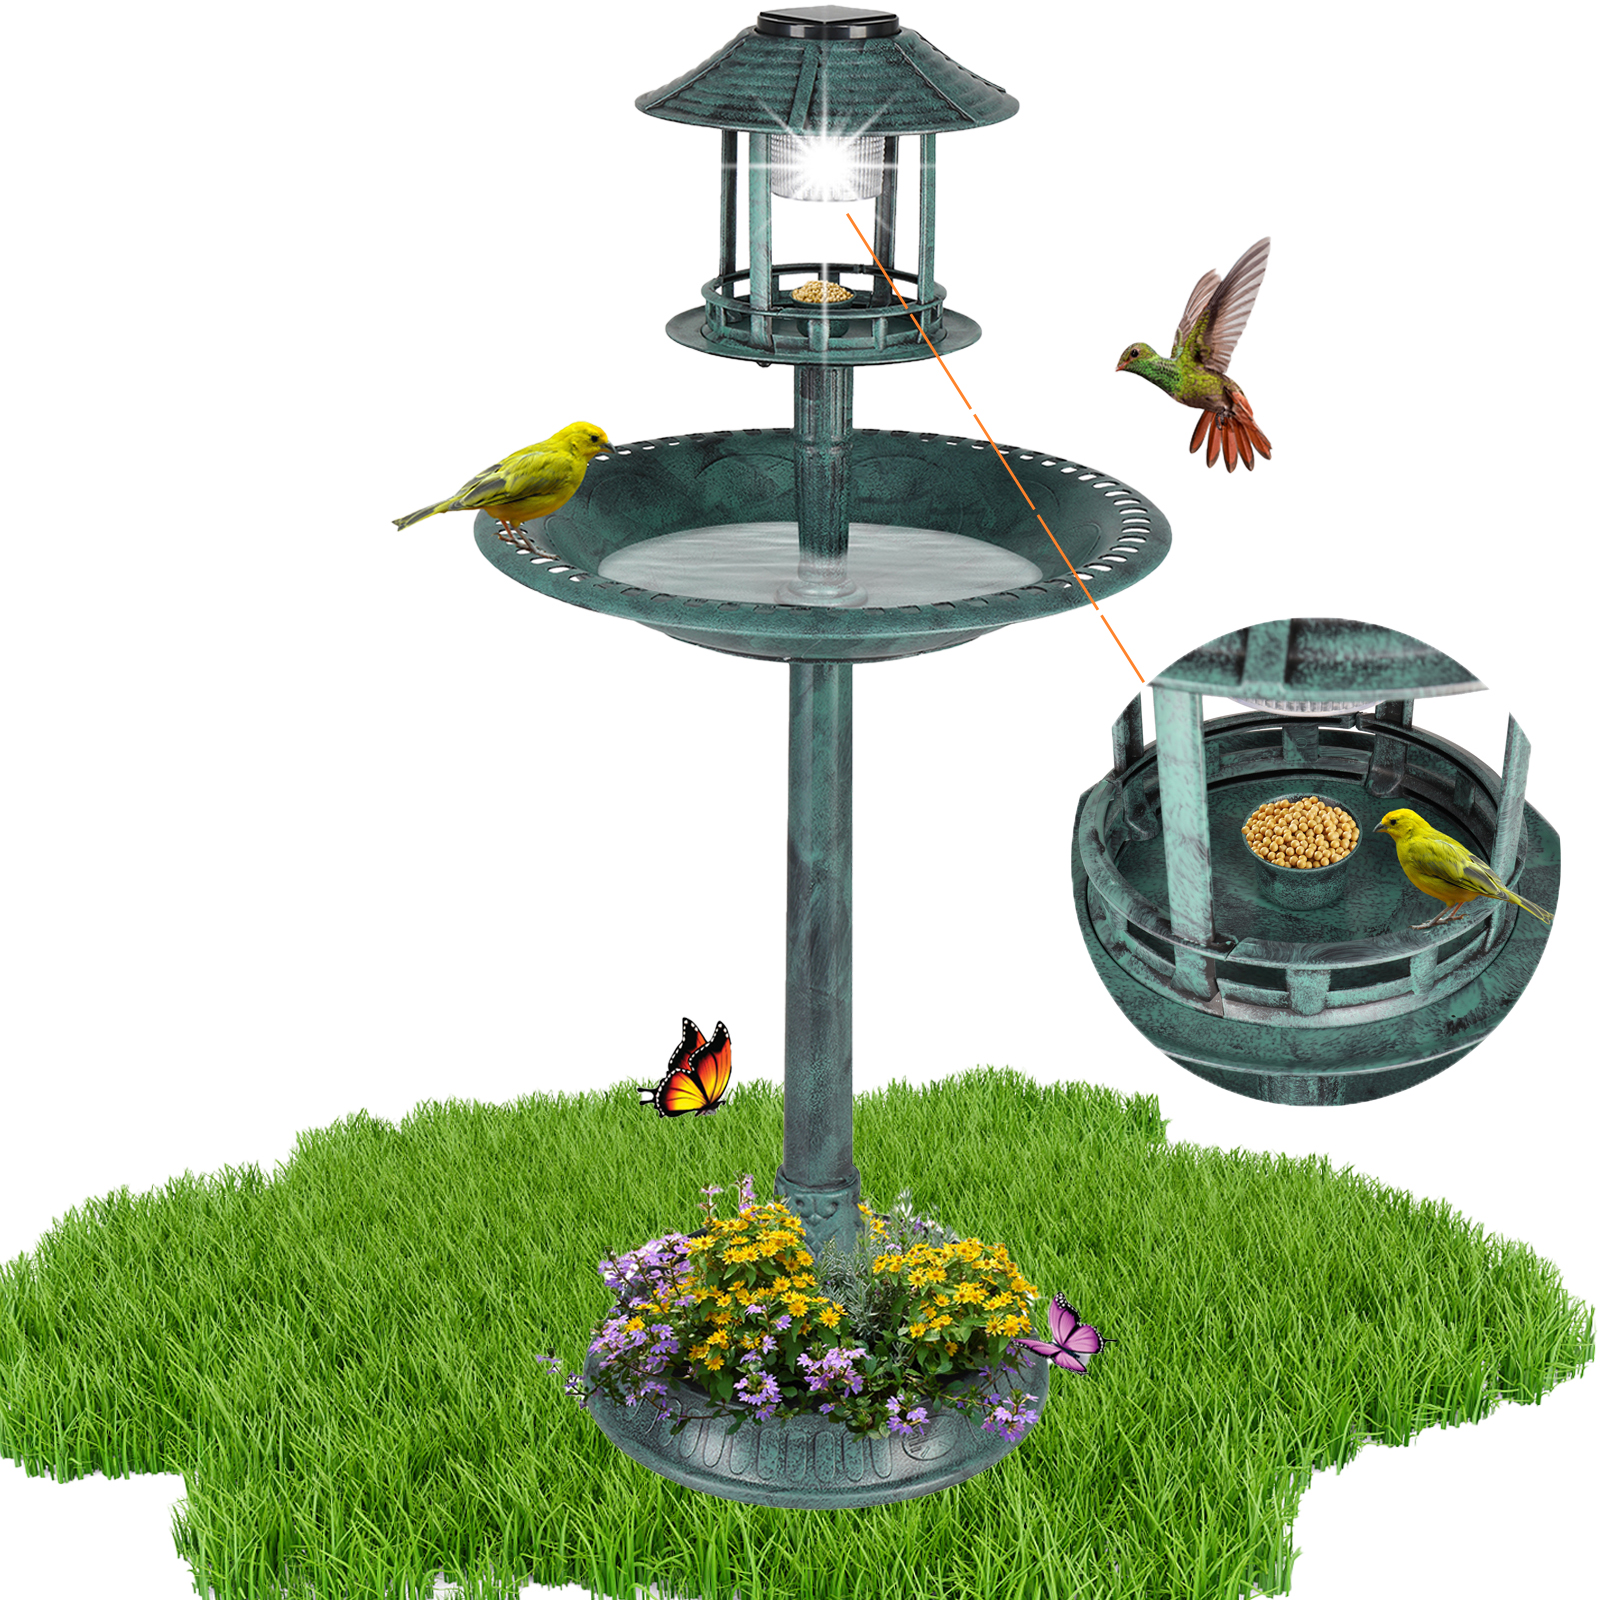 Seizeen Bird Bath Outdoors, 42''H Rustic Garden Birdbaths with Bird Feeder, Garden Decor w/Solar Light & Planter, Green - image 1 of 10